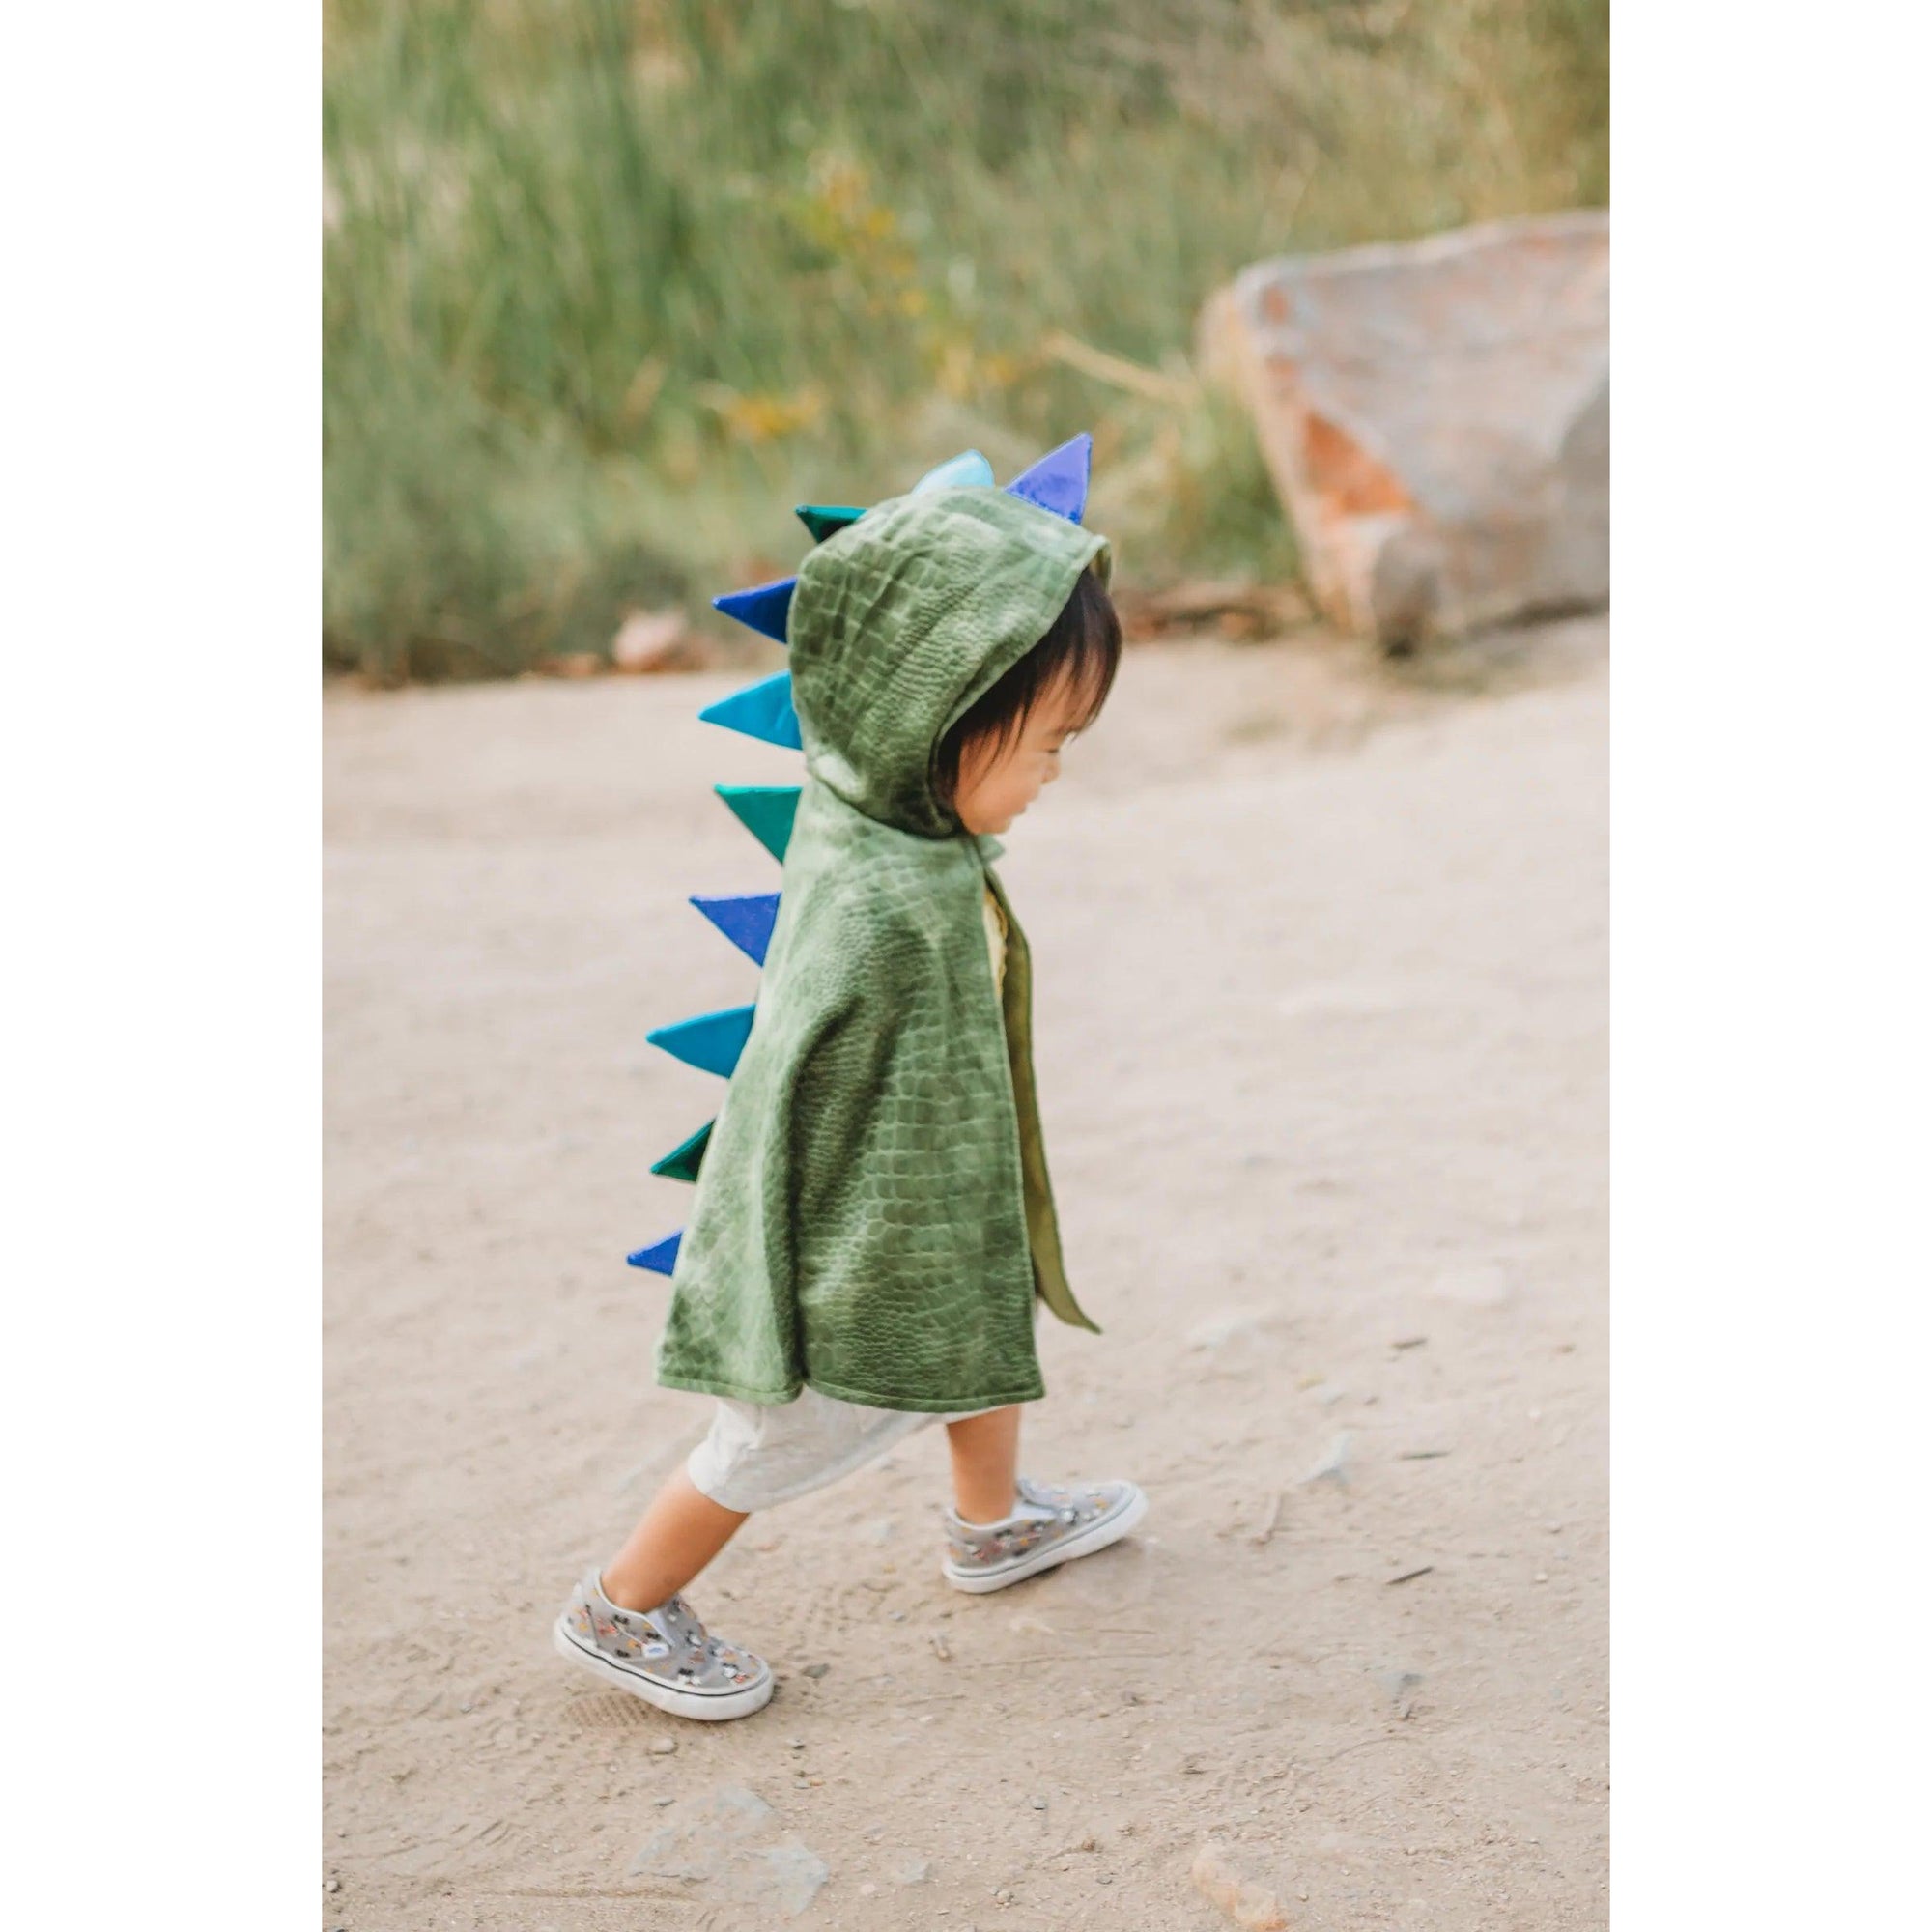 Baby dragon cape on child.